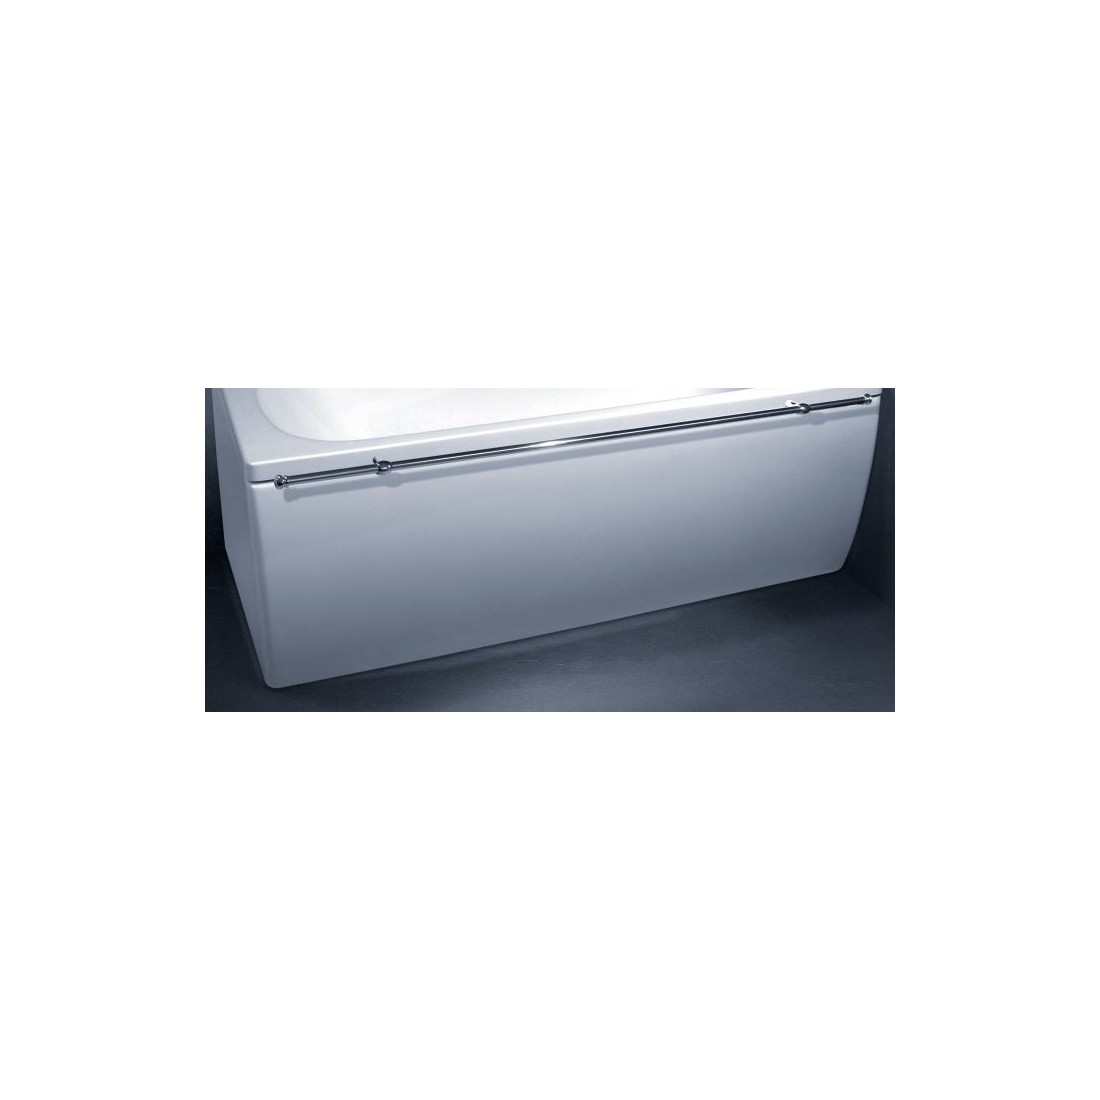 Apdaila voniai Vispool Classica balta, 170, L formos kairės pusės